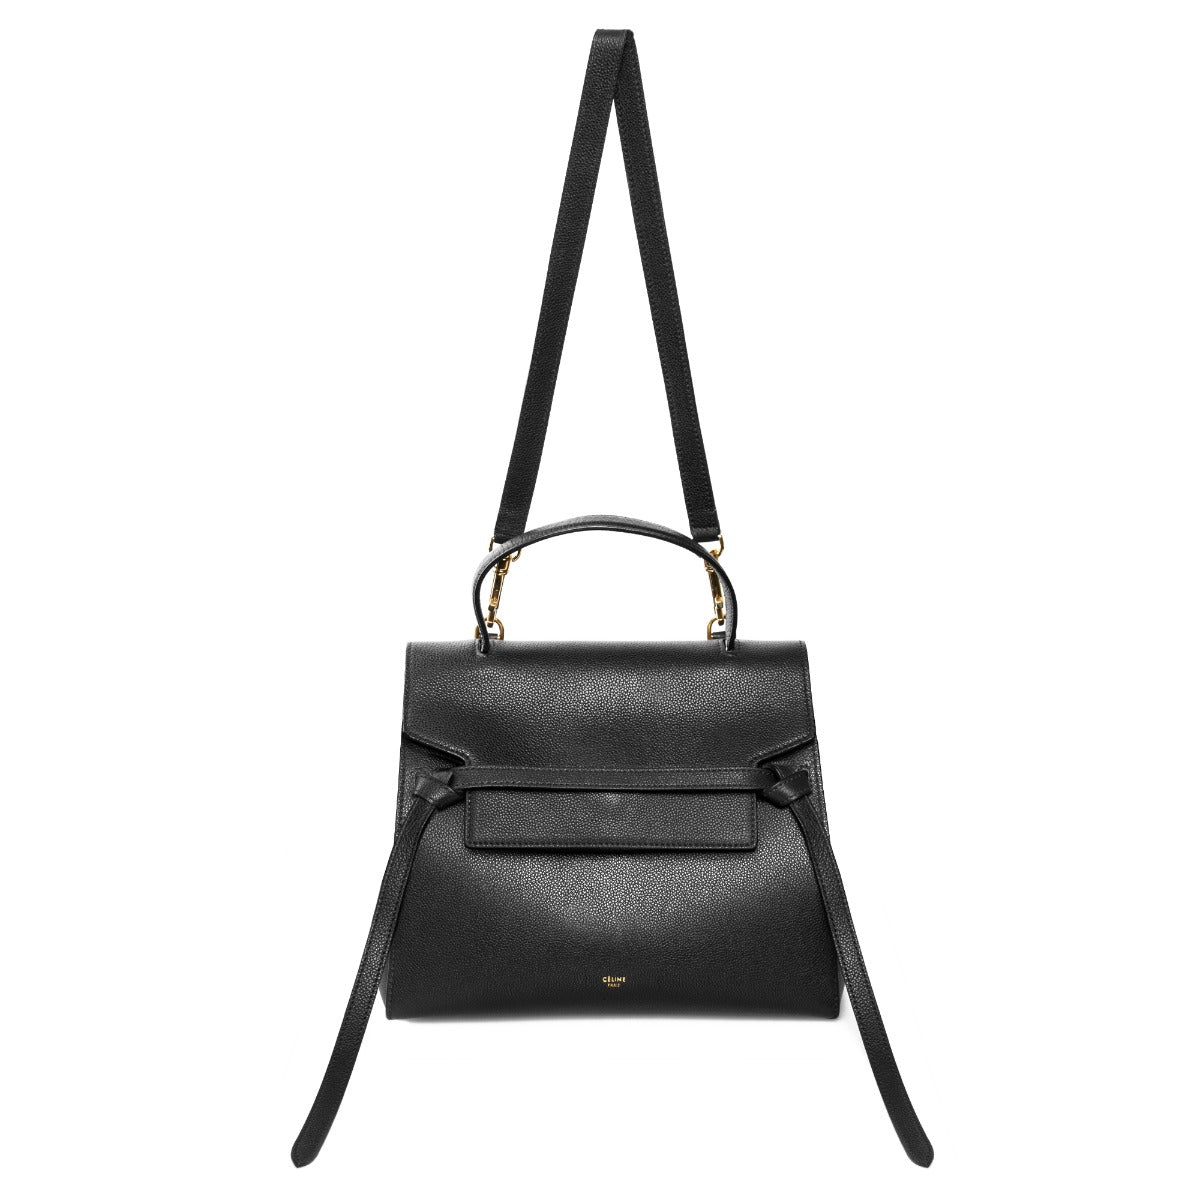 Celine Black Leather Micro Belt Top Handle Bag Celine